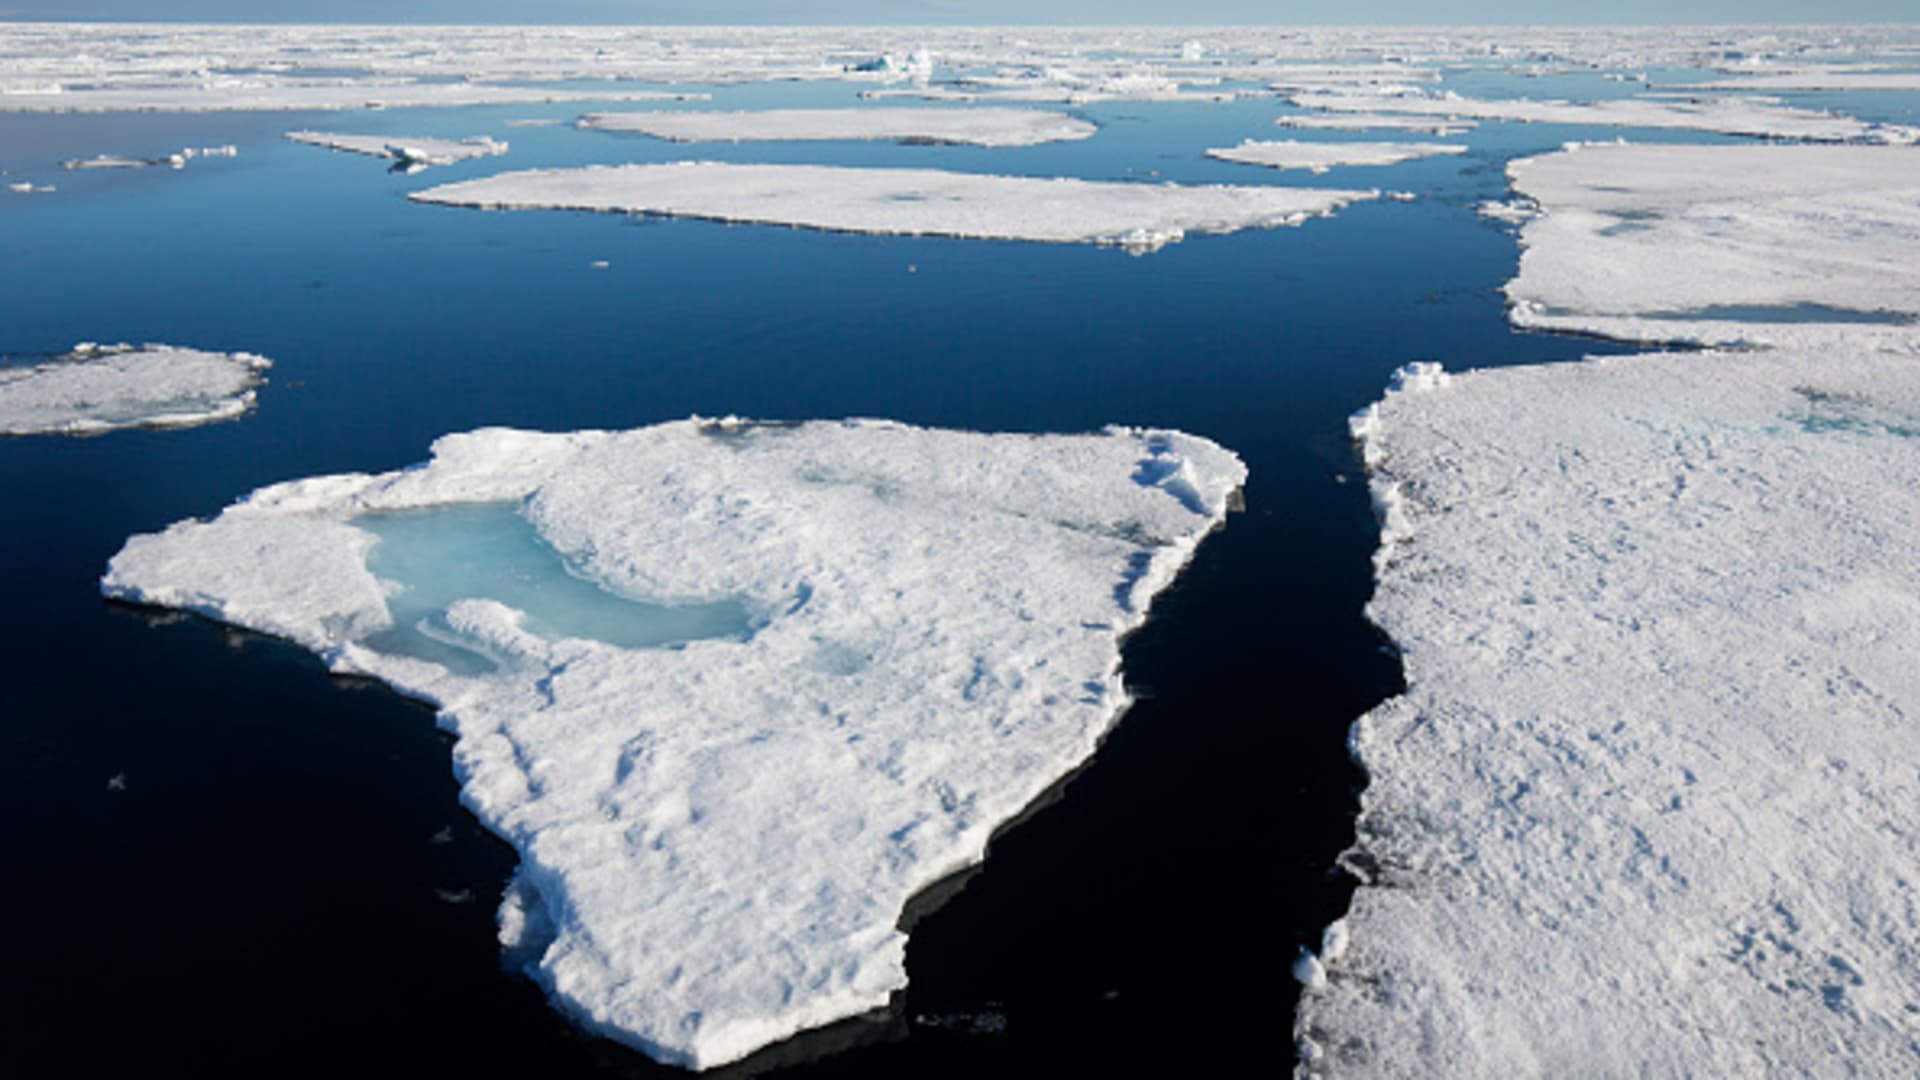 Drift ice - ice flows in the Arctic Ocean, Nordaustlandet, North East Land, Norway.